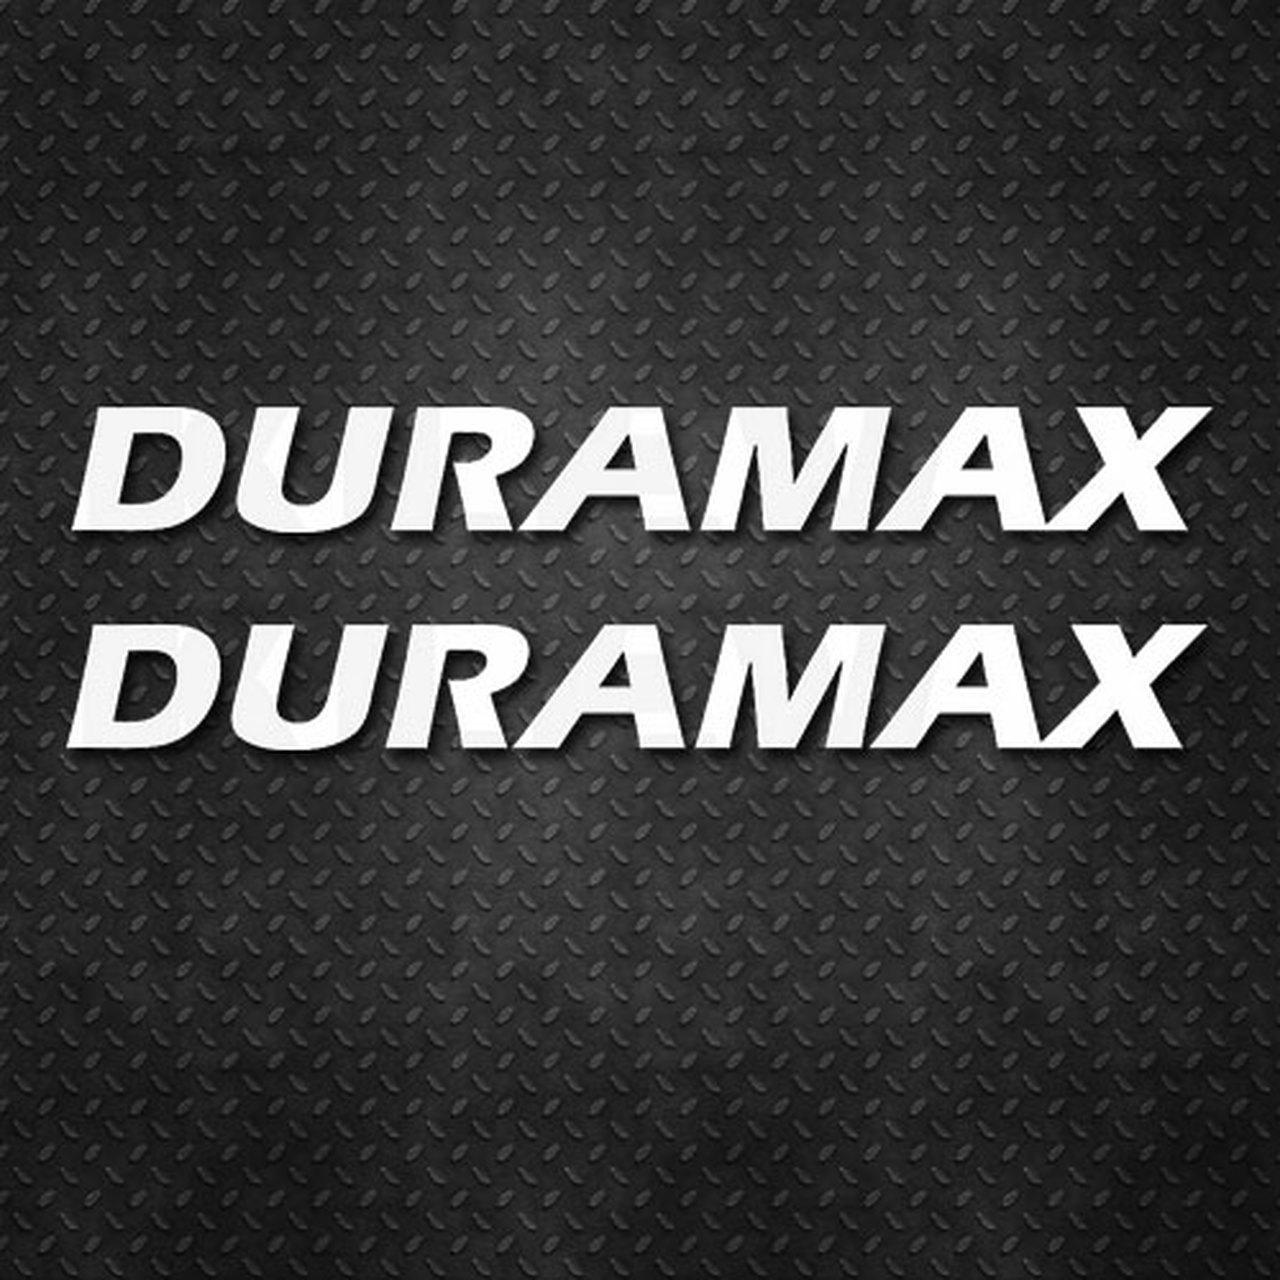 Drumax Logo - Duramax Logo Set Vinyl Decal